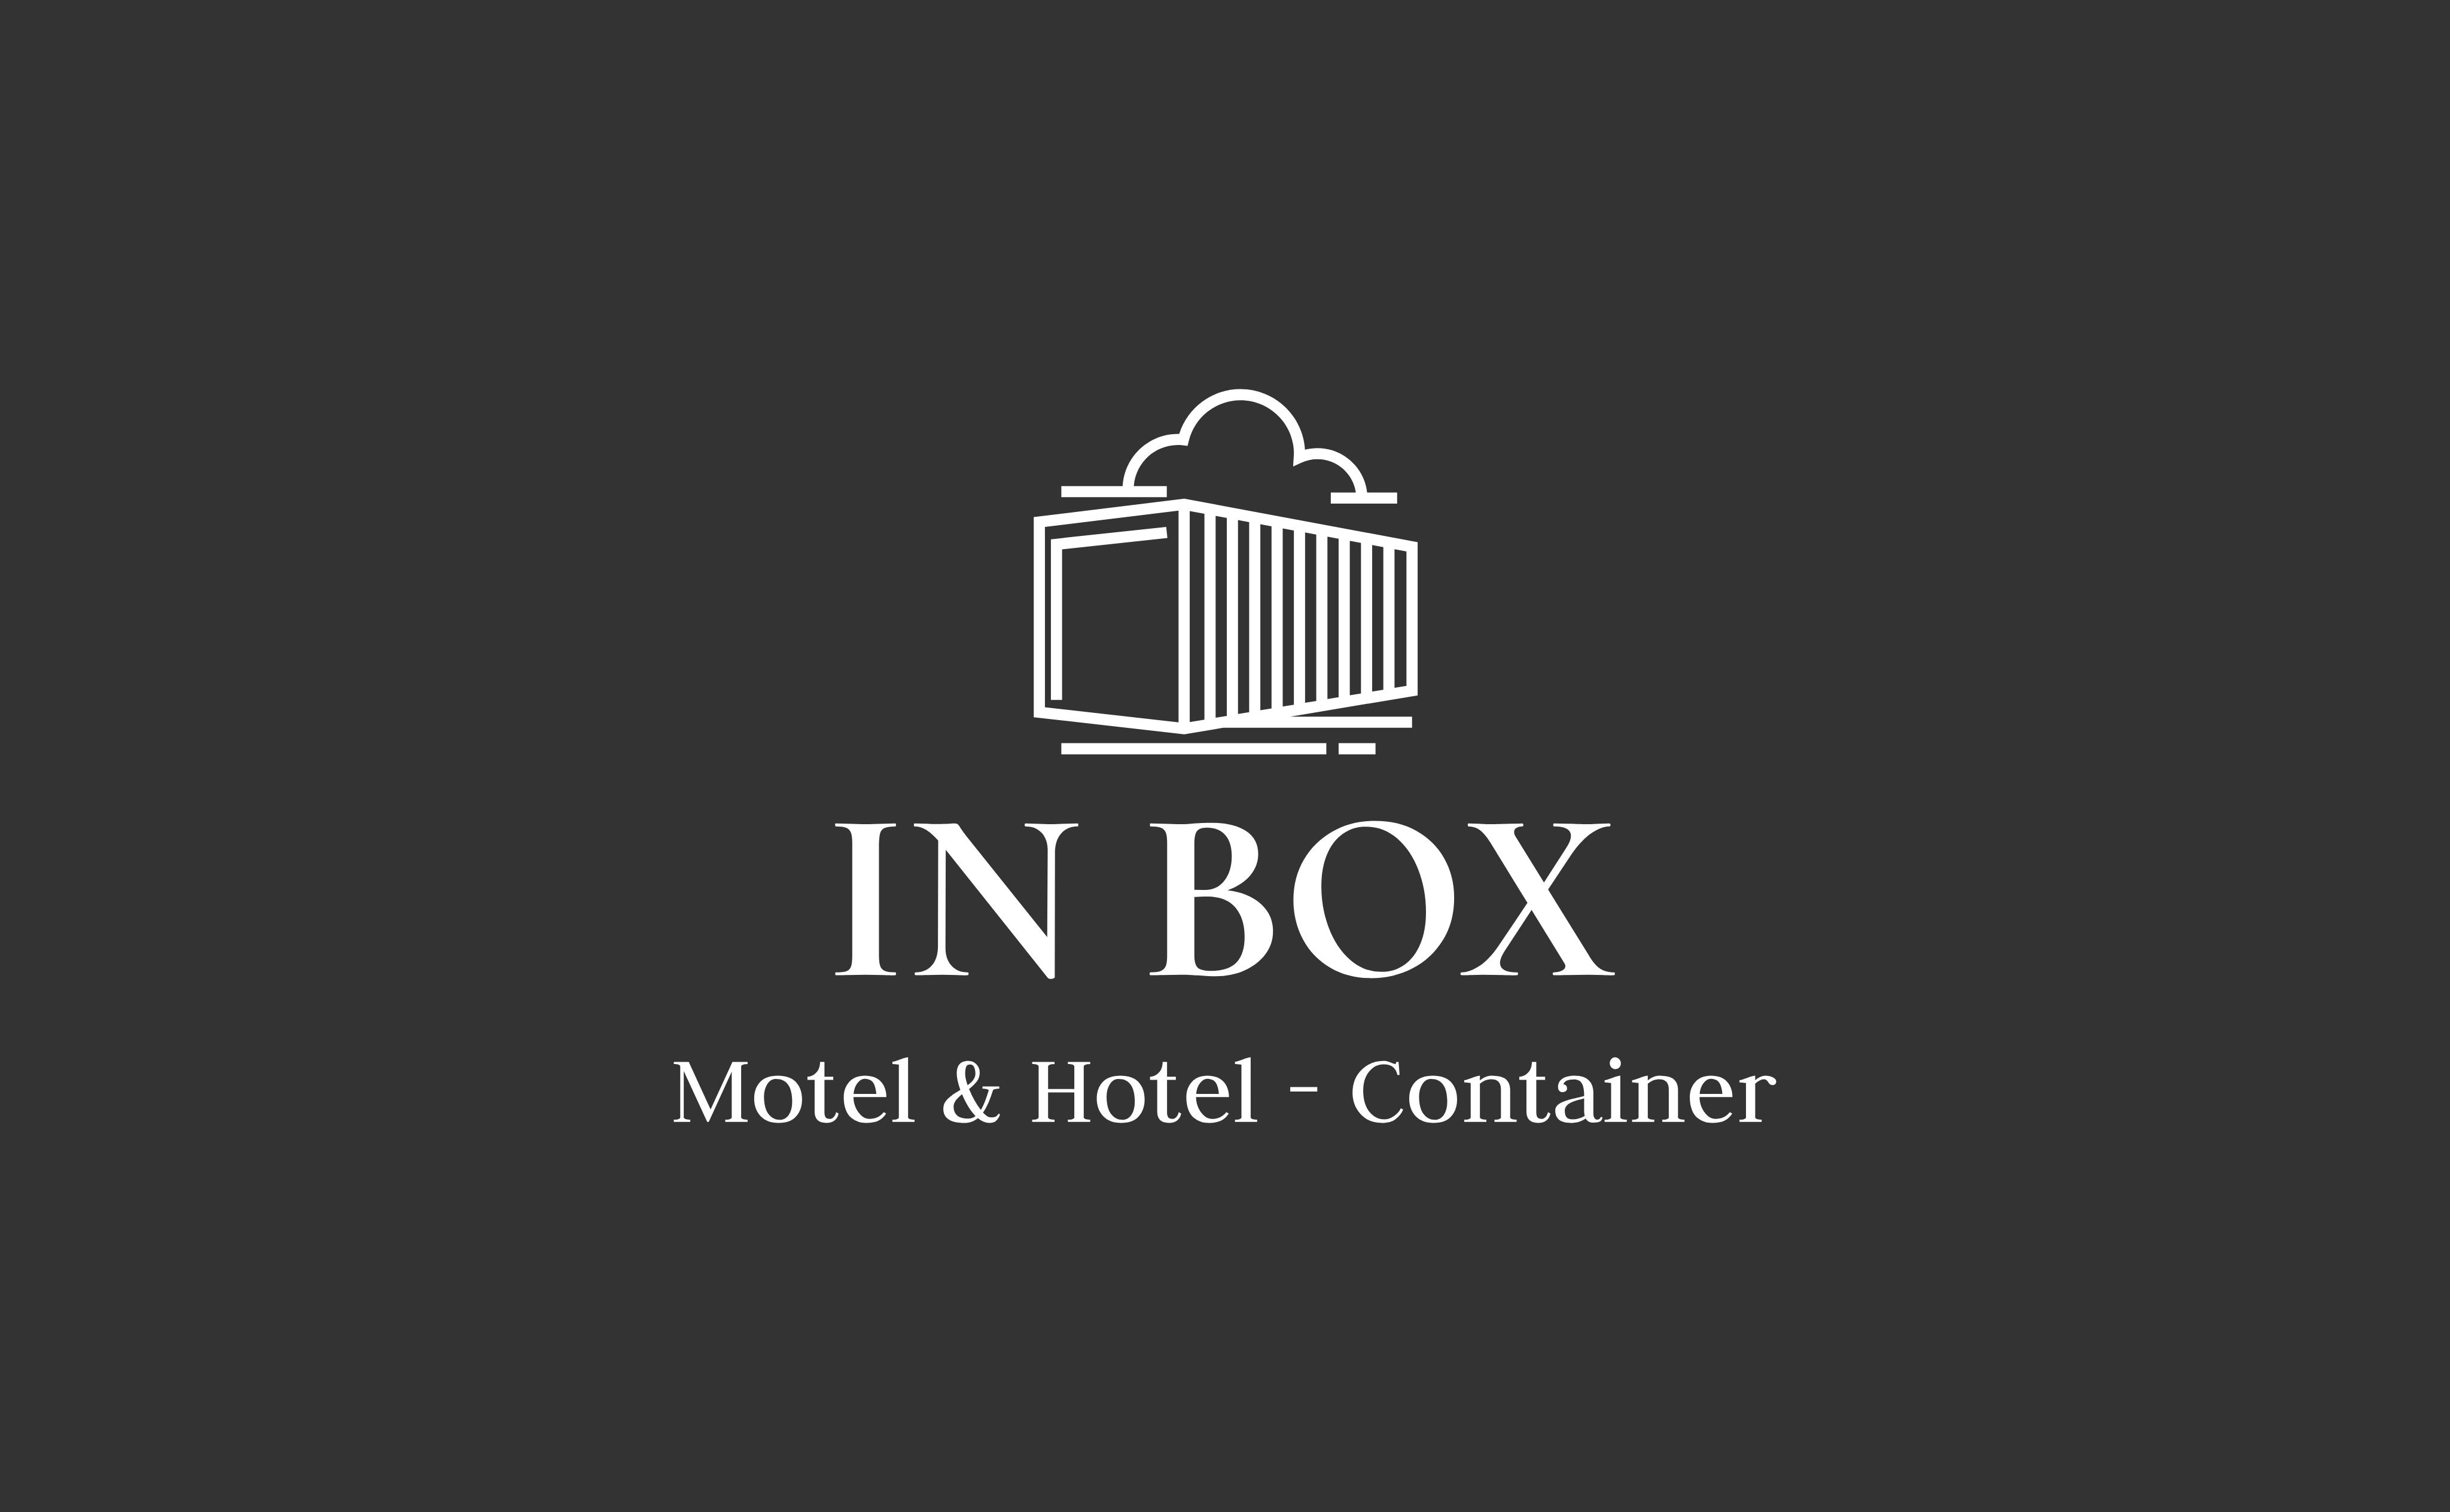 In Box Motel & Hotel Container